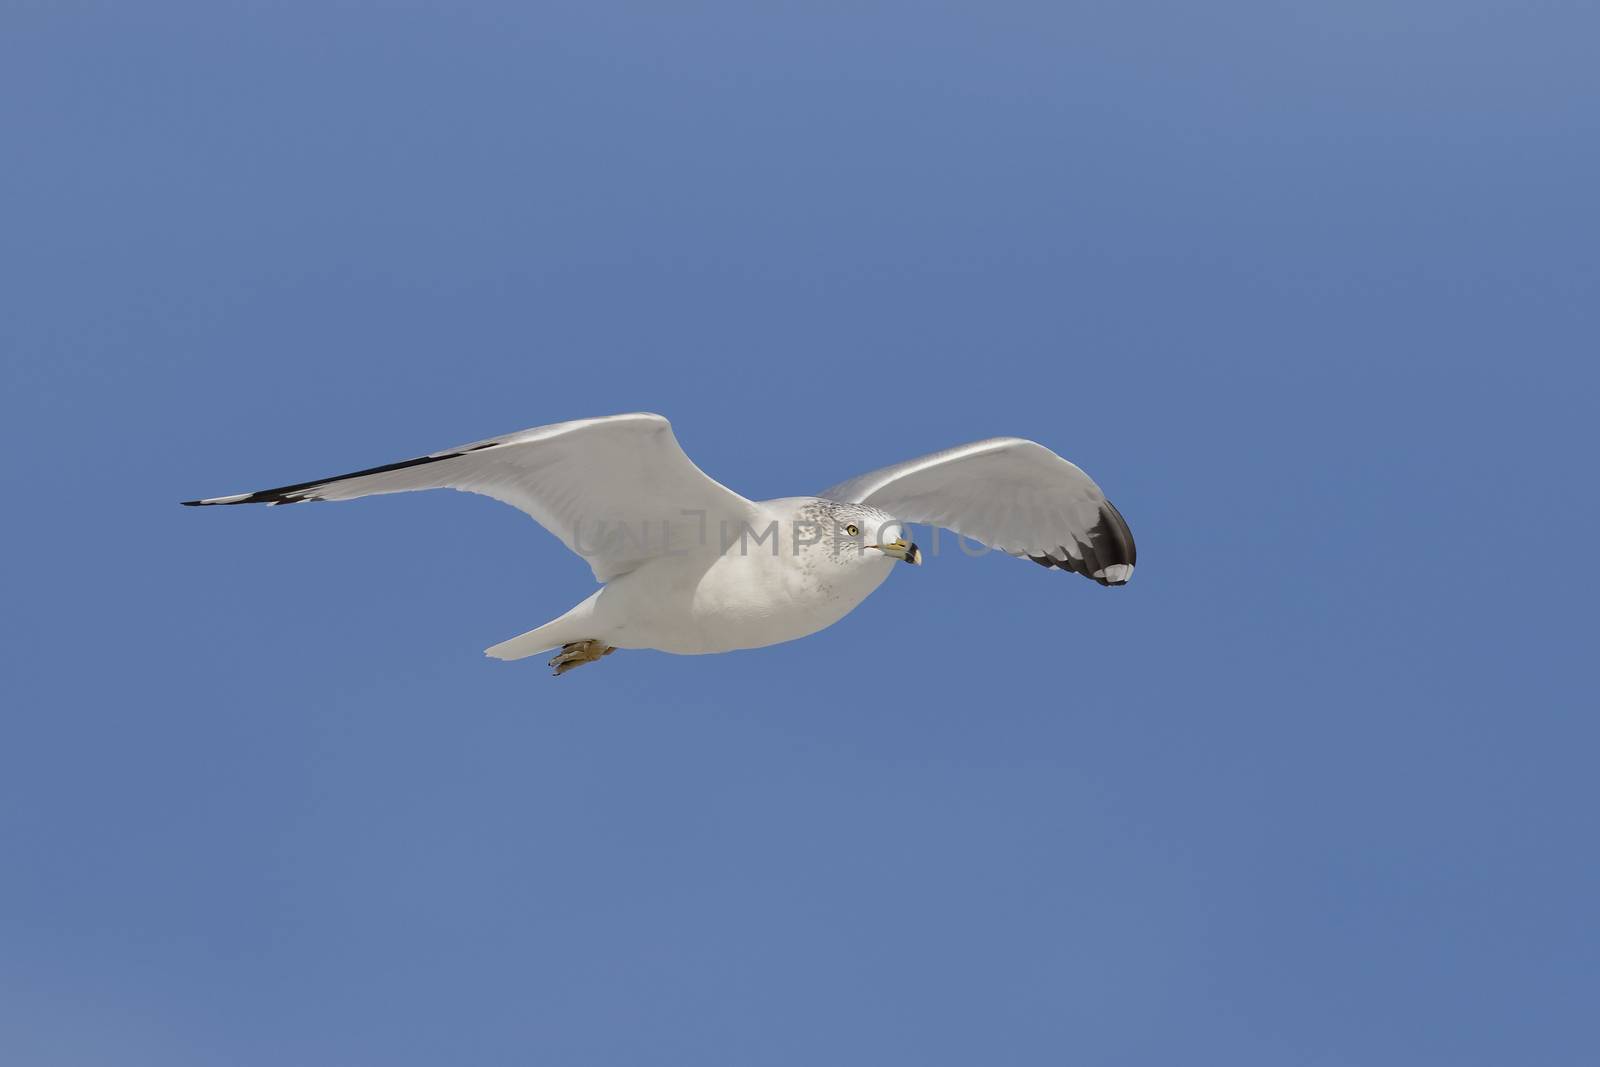 Ring-billed Gull (Larus delawarensis) in flight against a blue sky - Fort de Soto Park, St. Petersburg, Florida